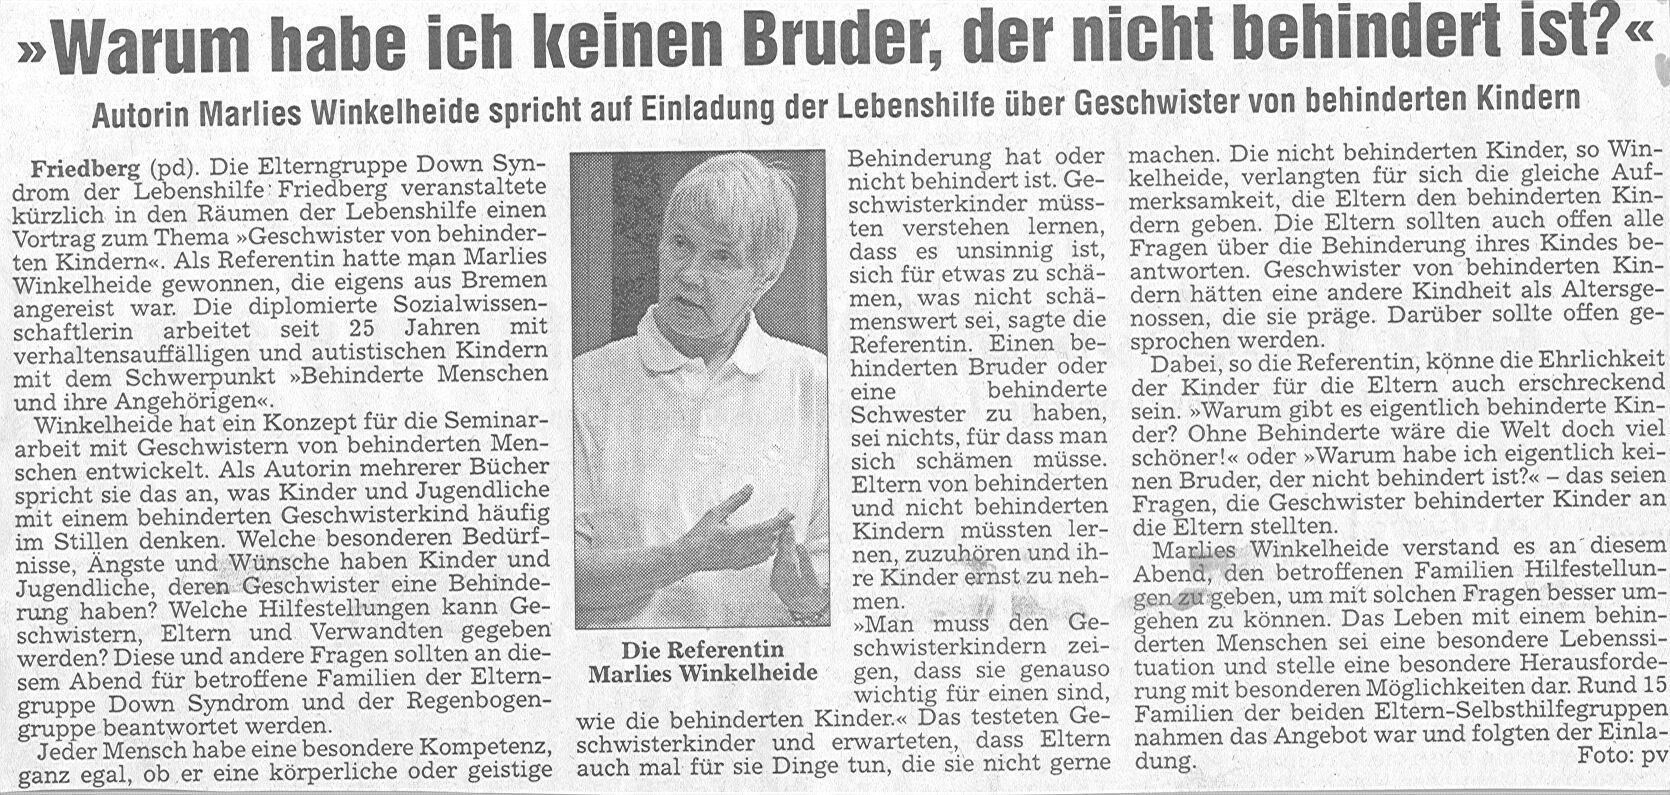 Originalausschnitt aus der Wetterauer Zeitung, Mai 2004herbstein2006_wz.jpg